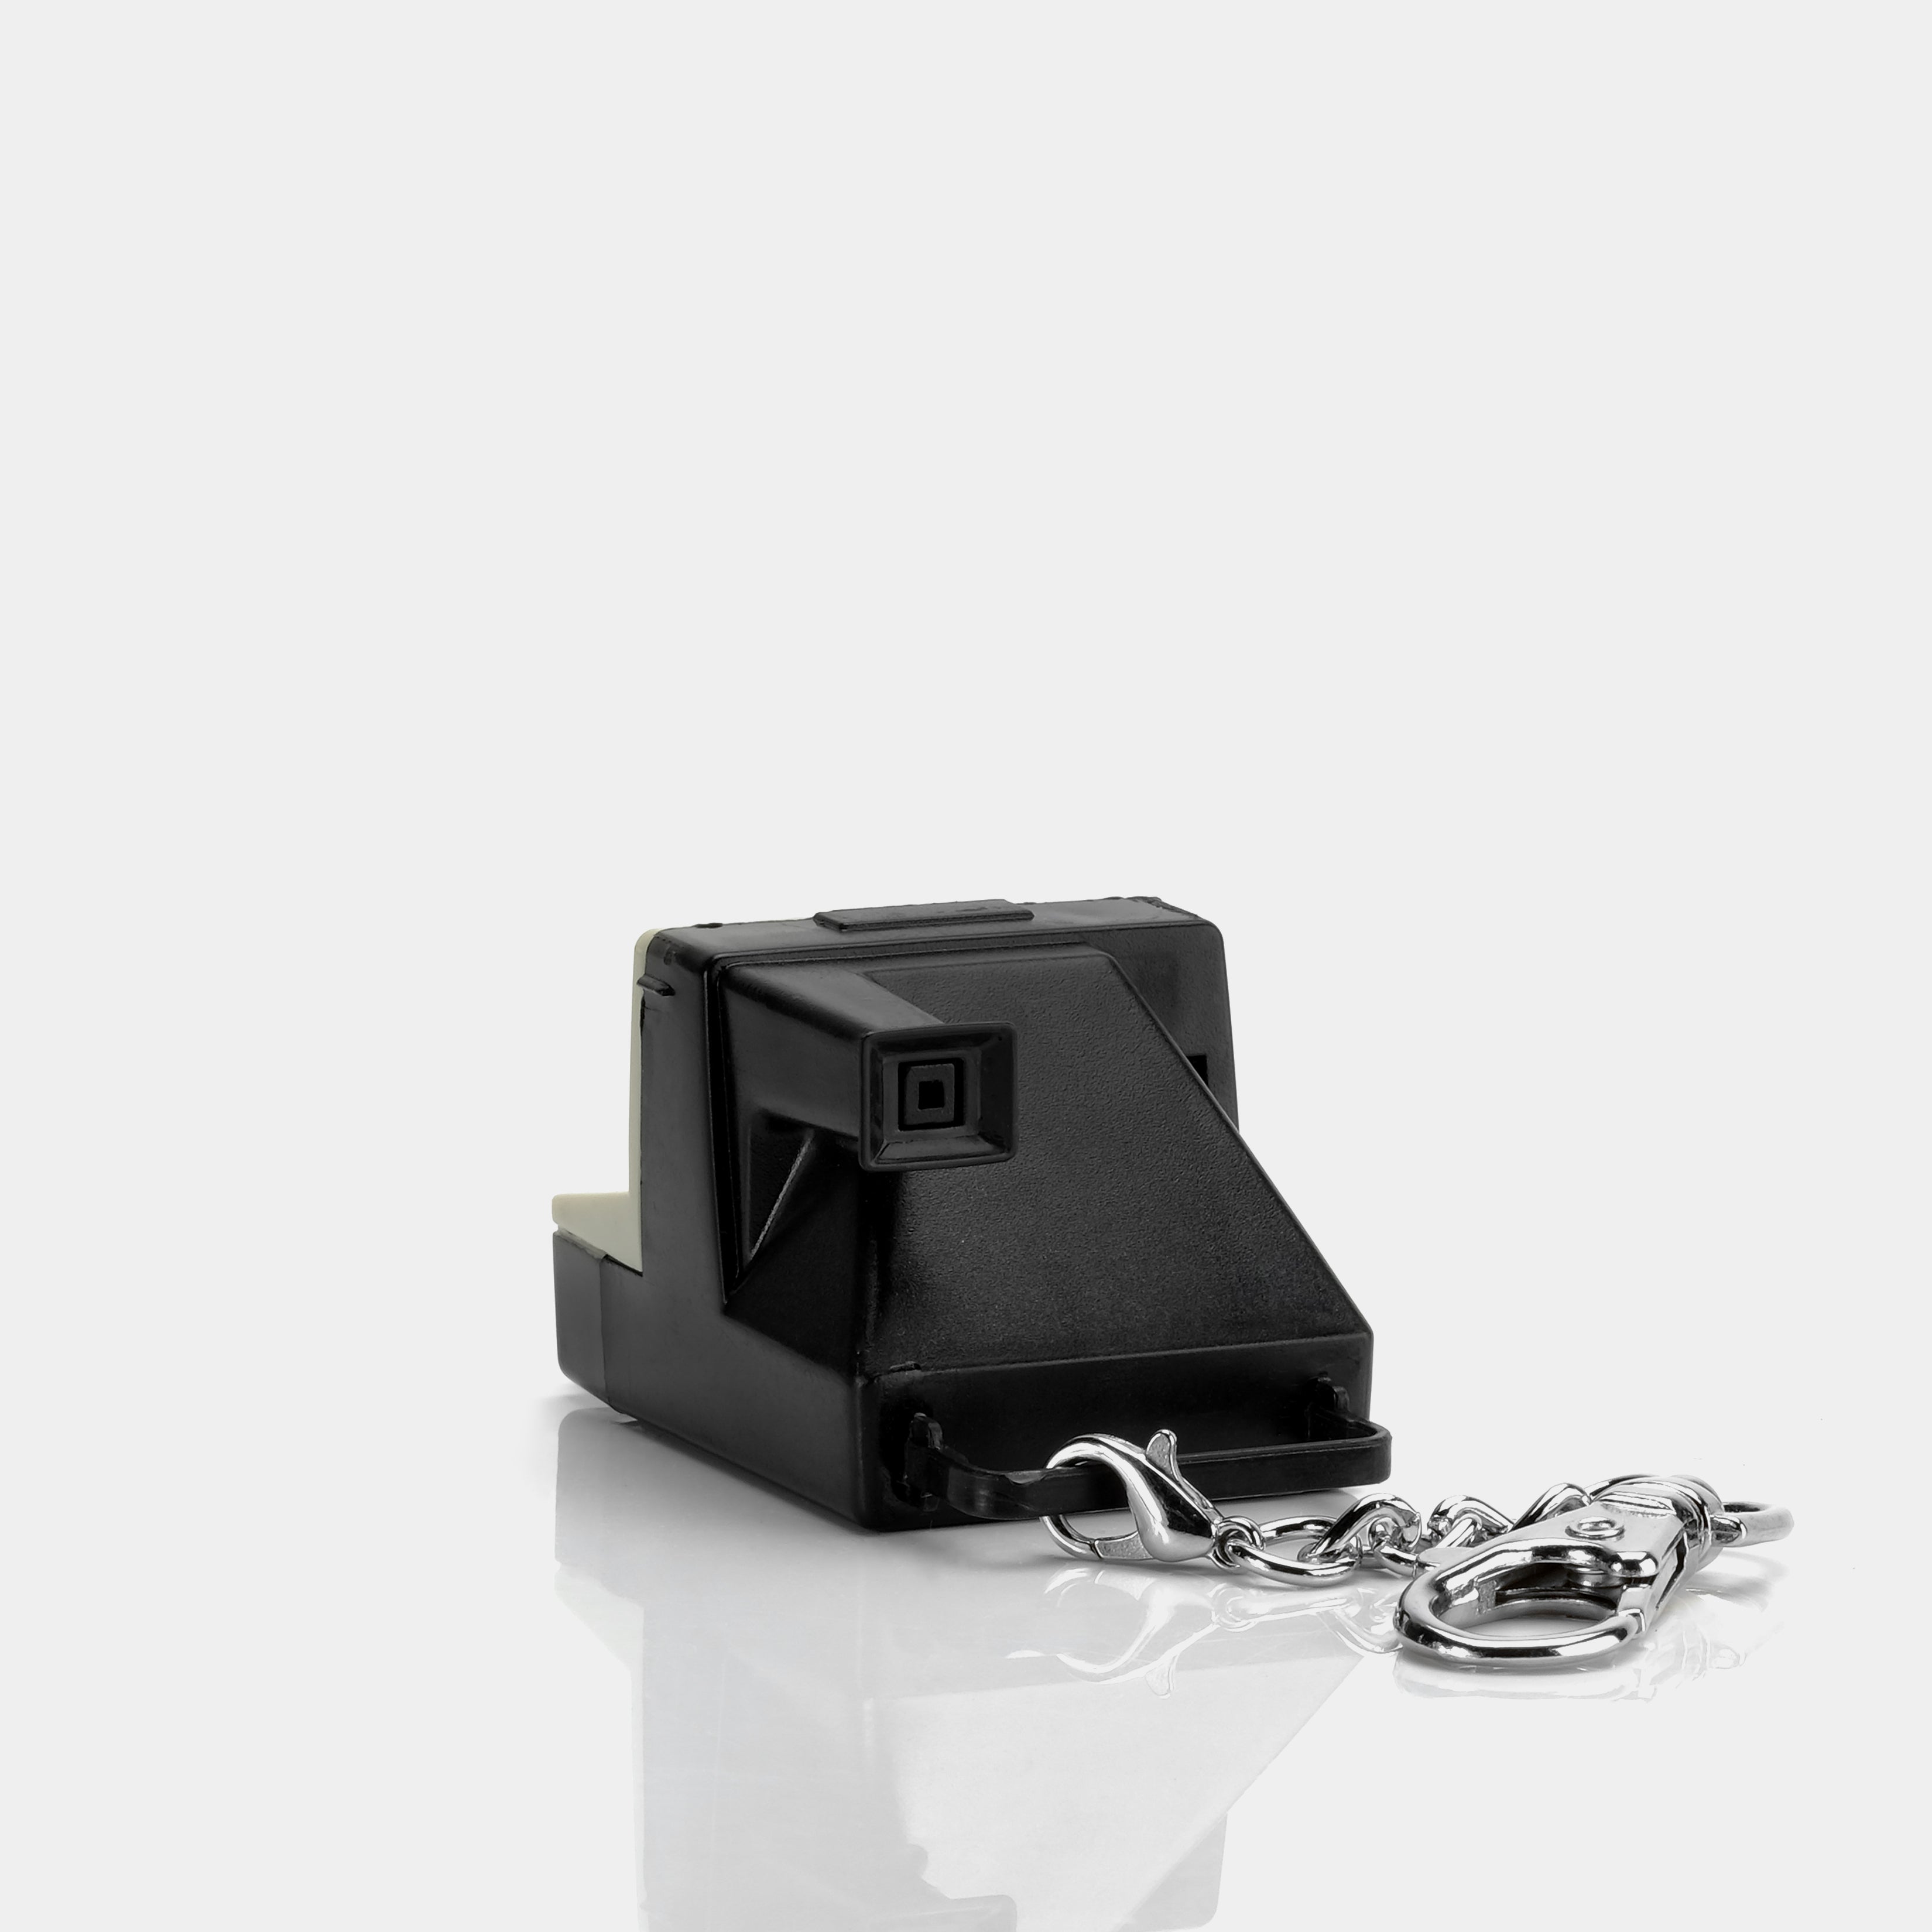 World's Coolest Polaroid SX-70 OneStep Keychain